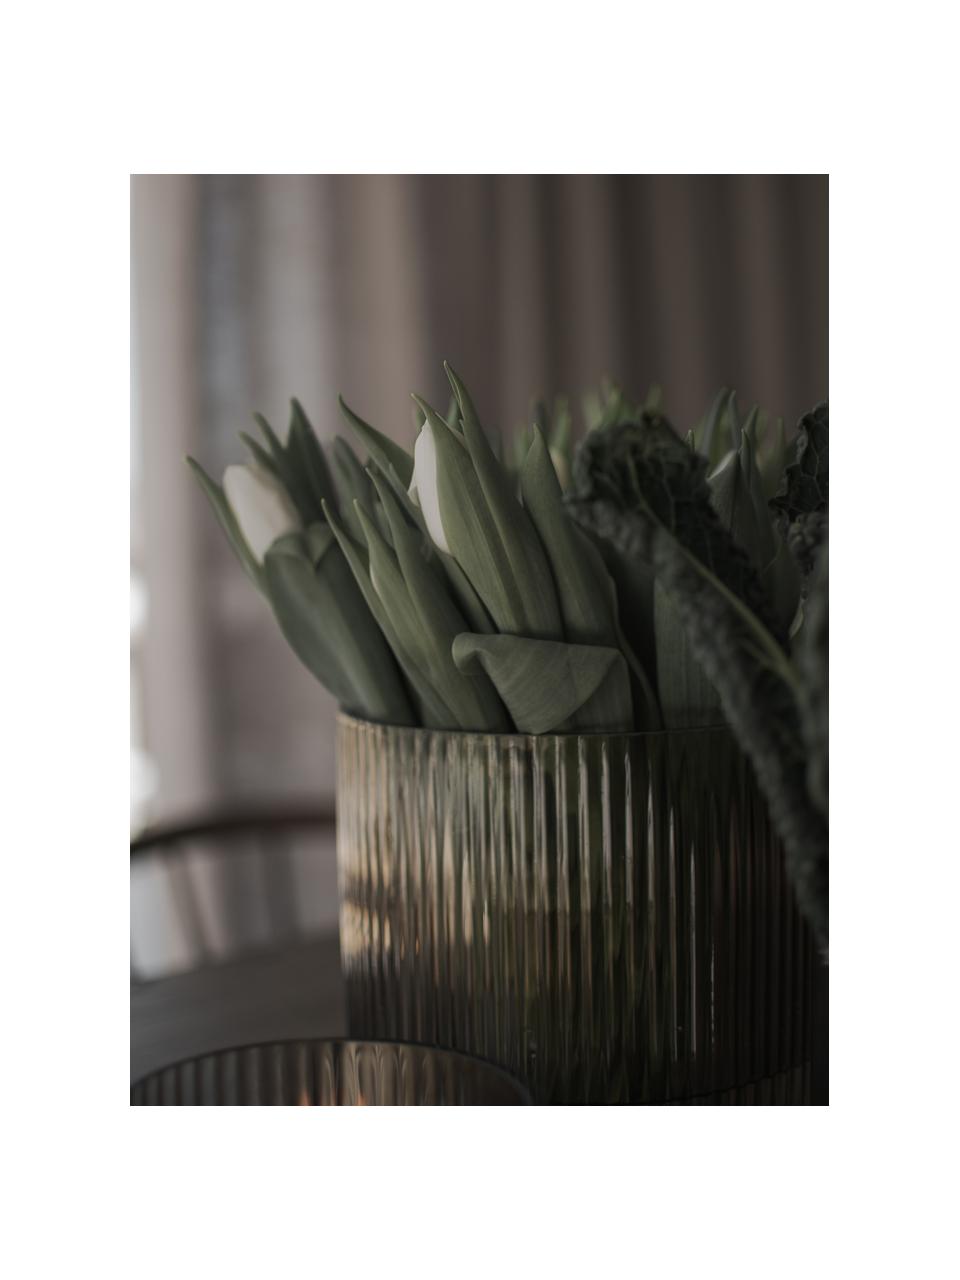 Skleněná váza Simple Stripe, V 22 cm, Sklo, Greige, poloprůhledná, Ø 19 cm, V 22 cm